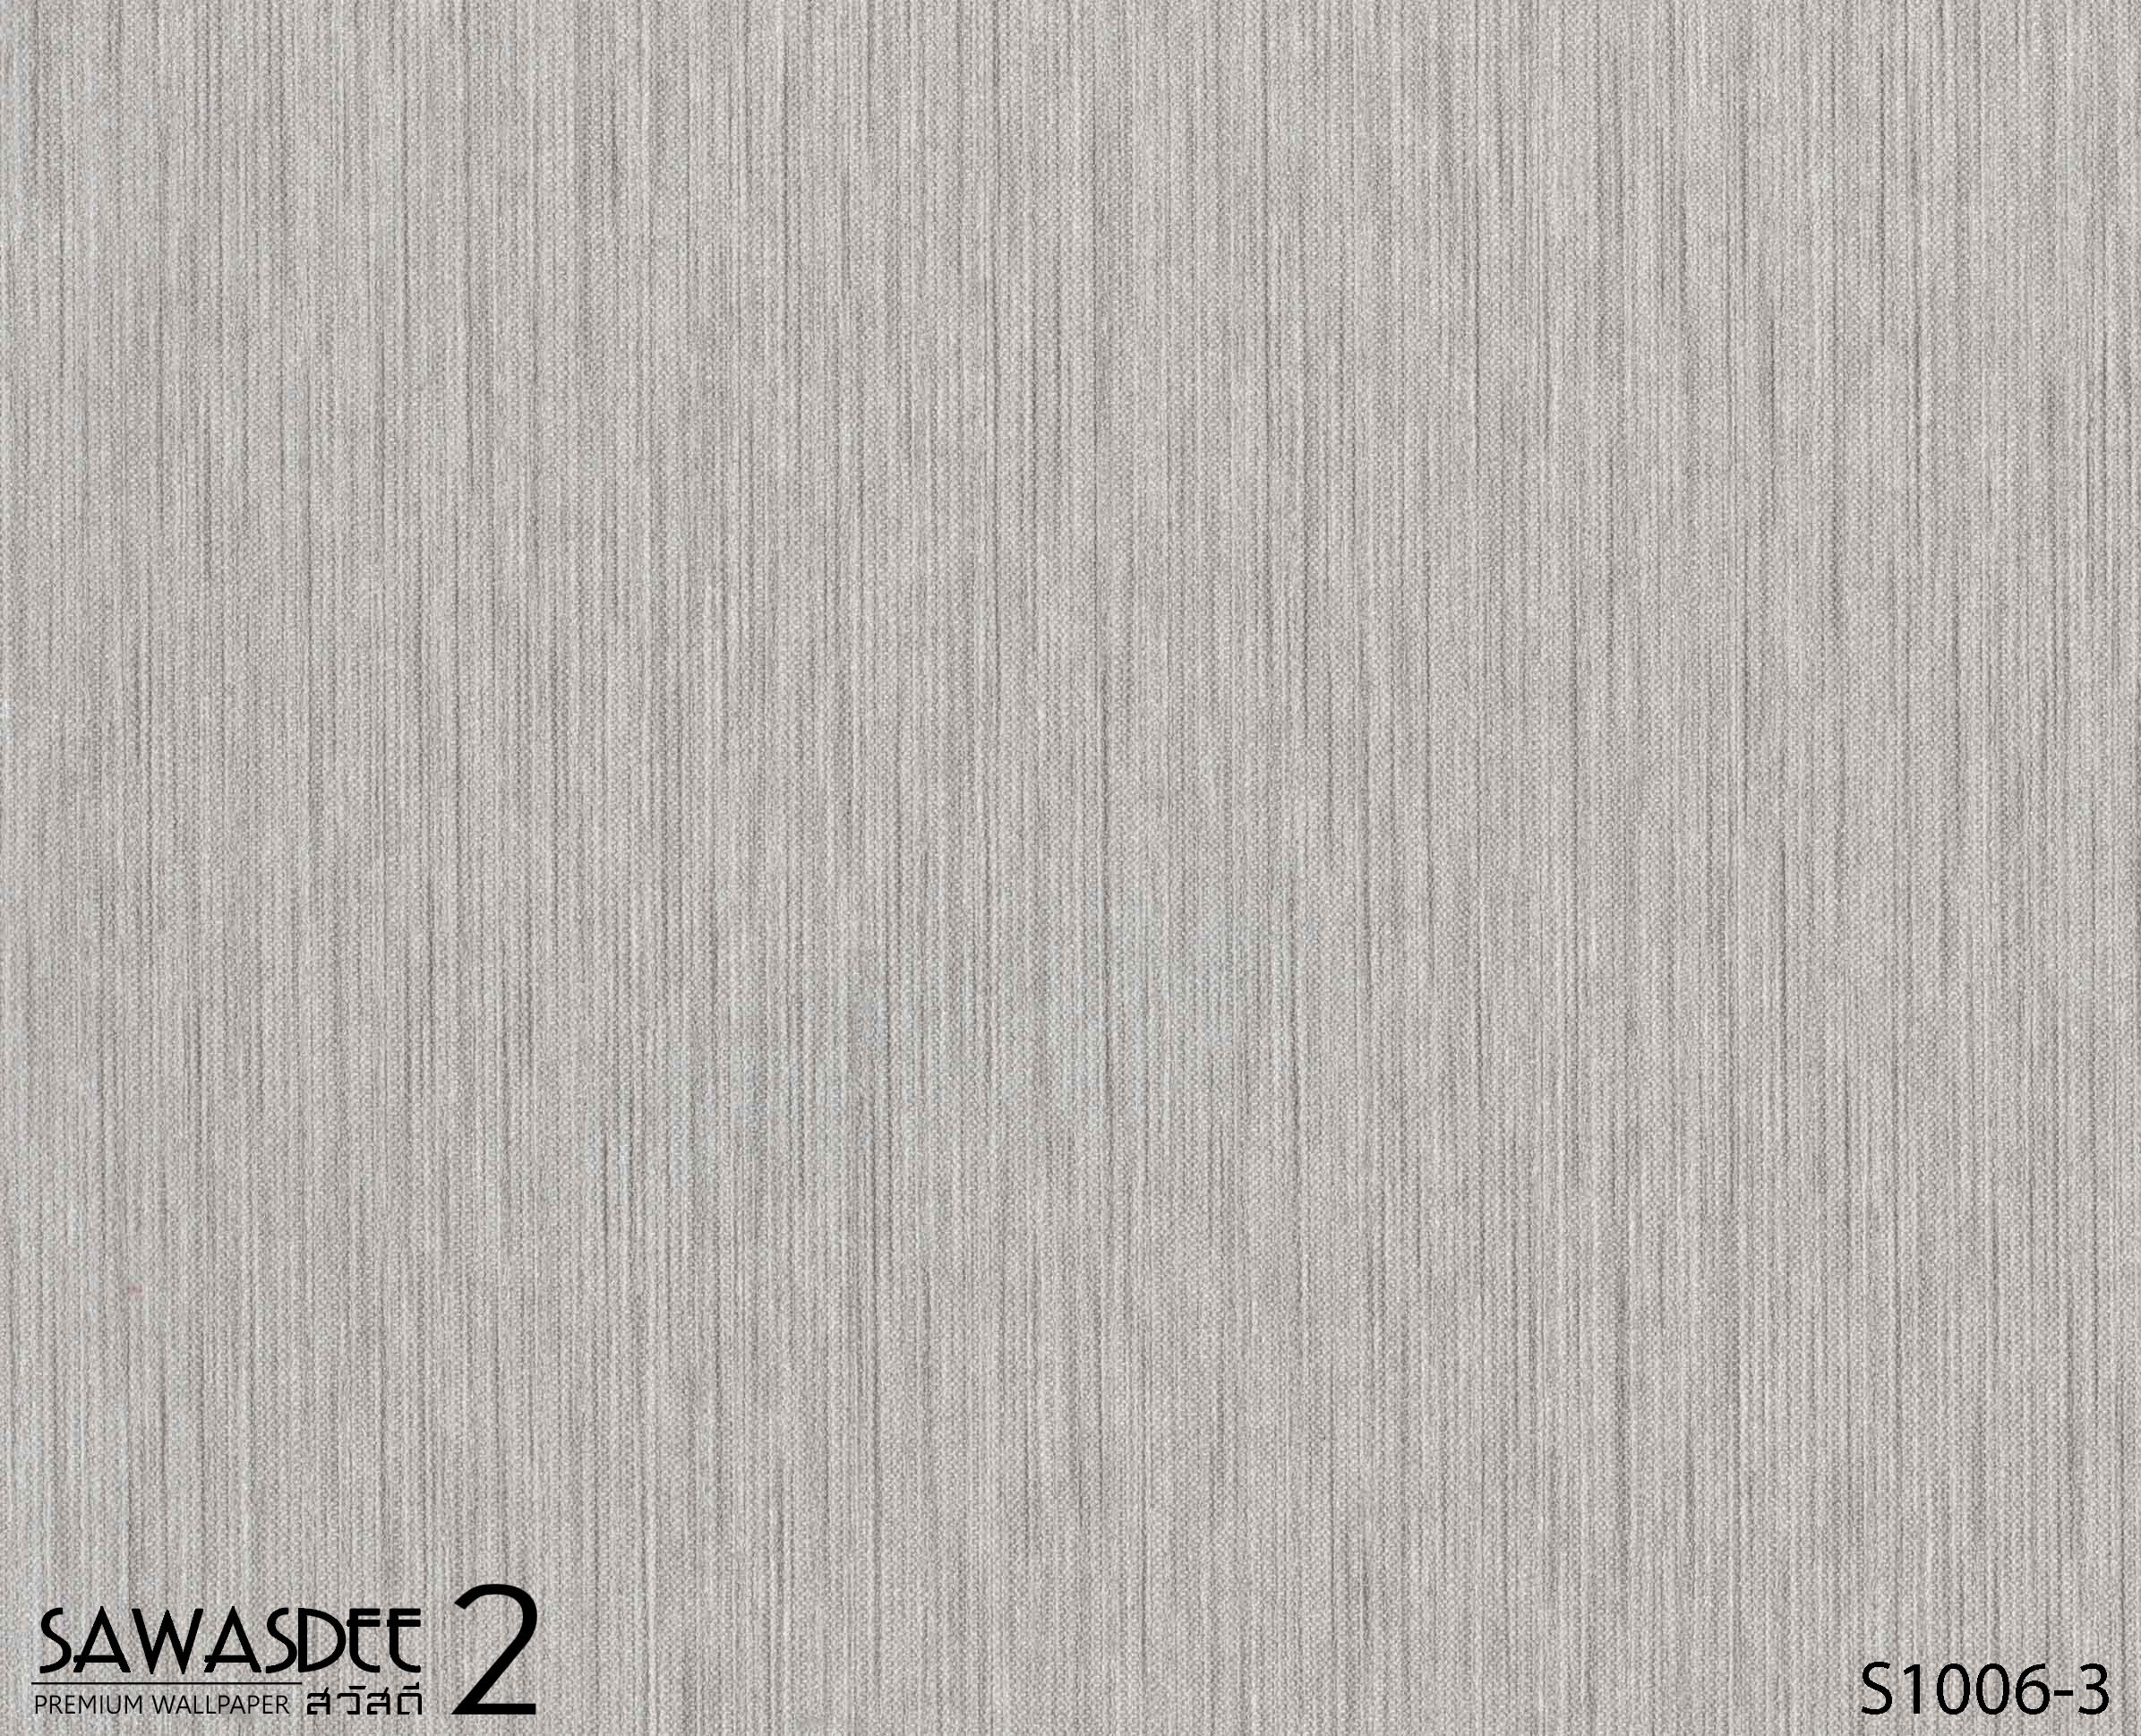 Wallpaper (SAWASDEE 2) S1006-3